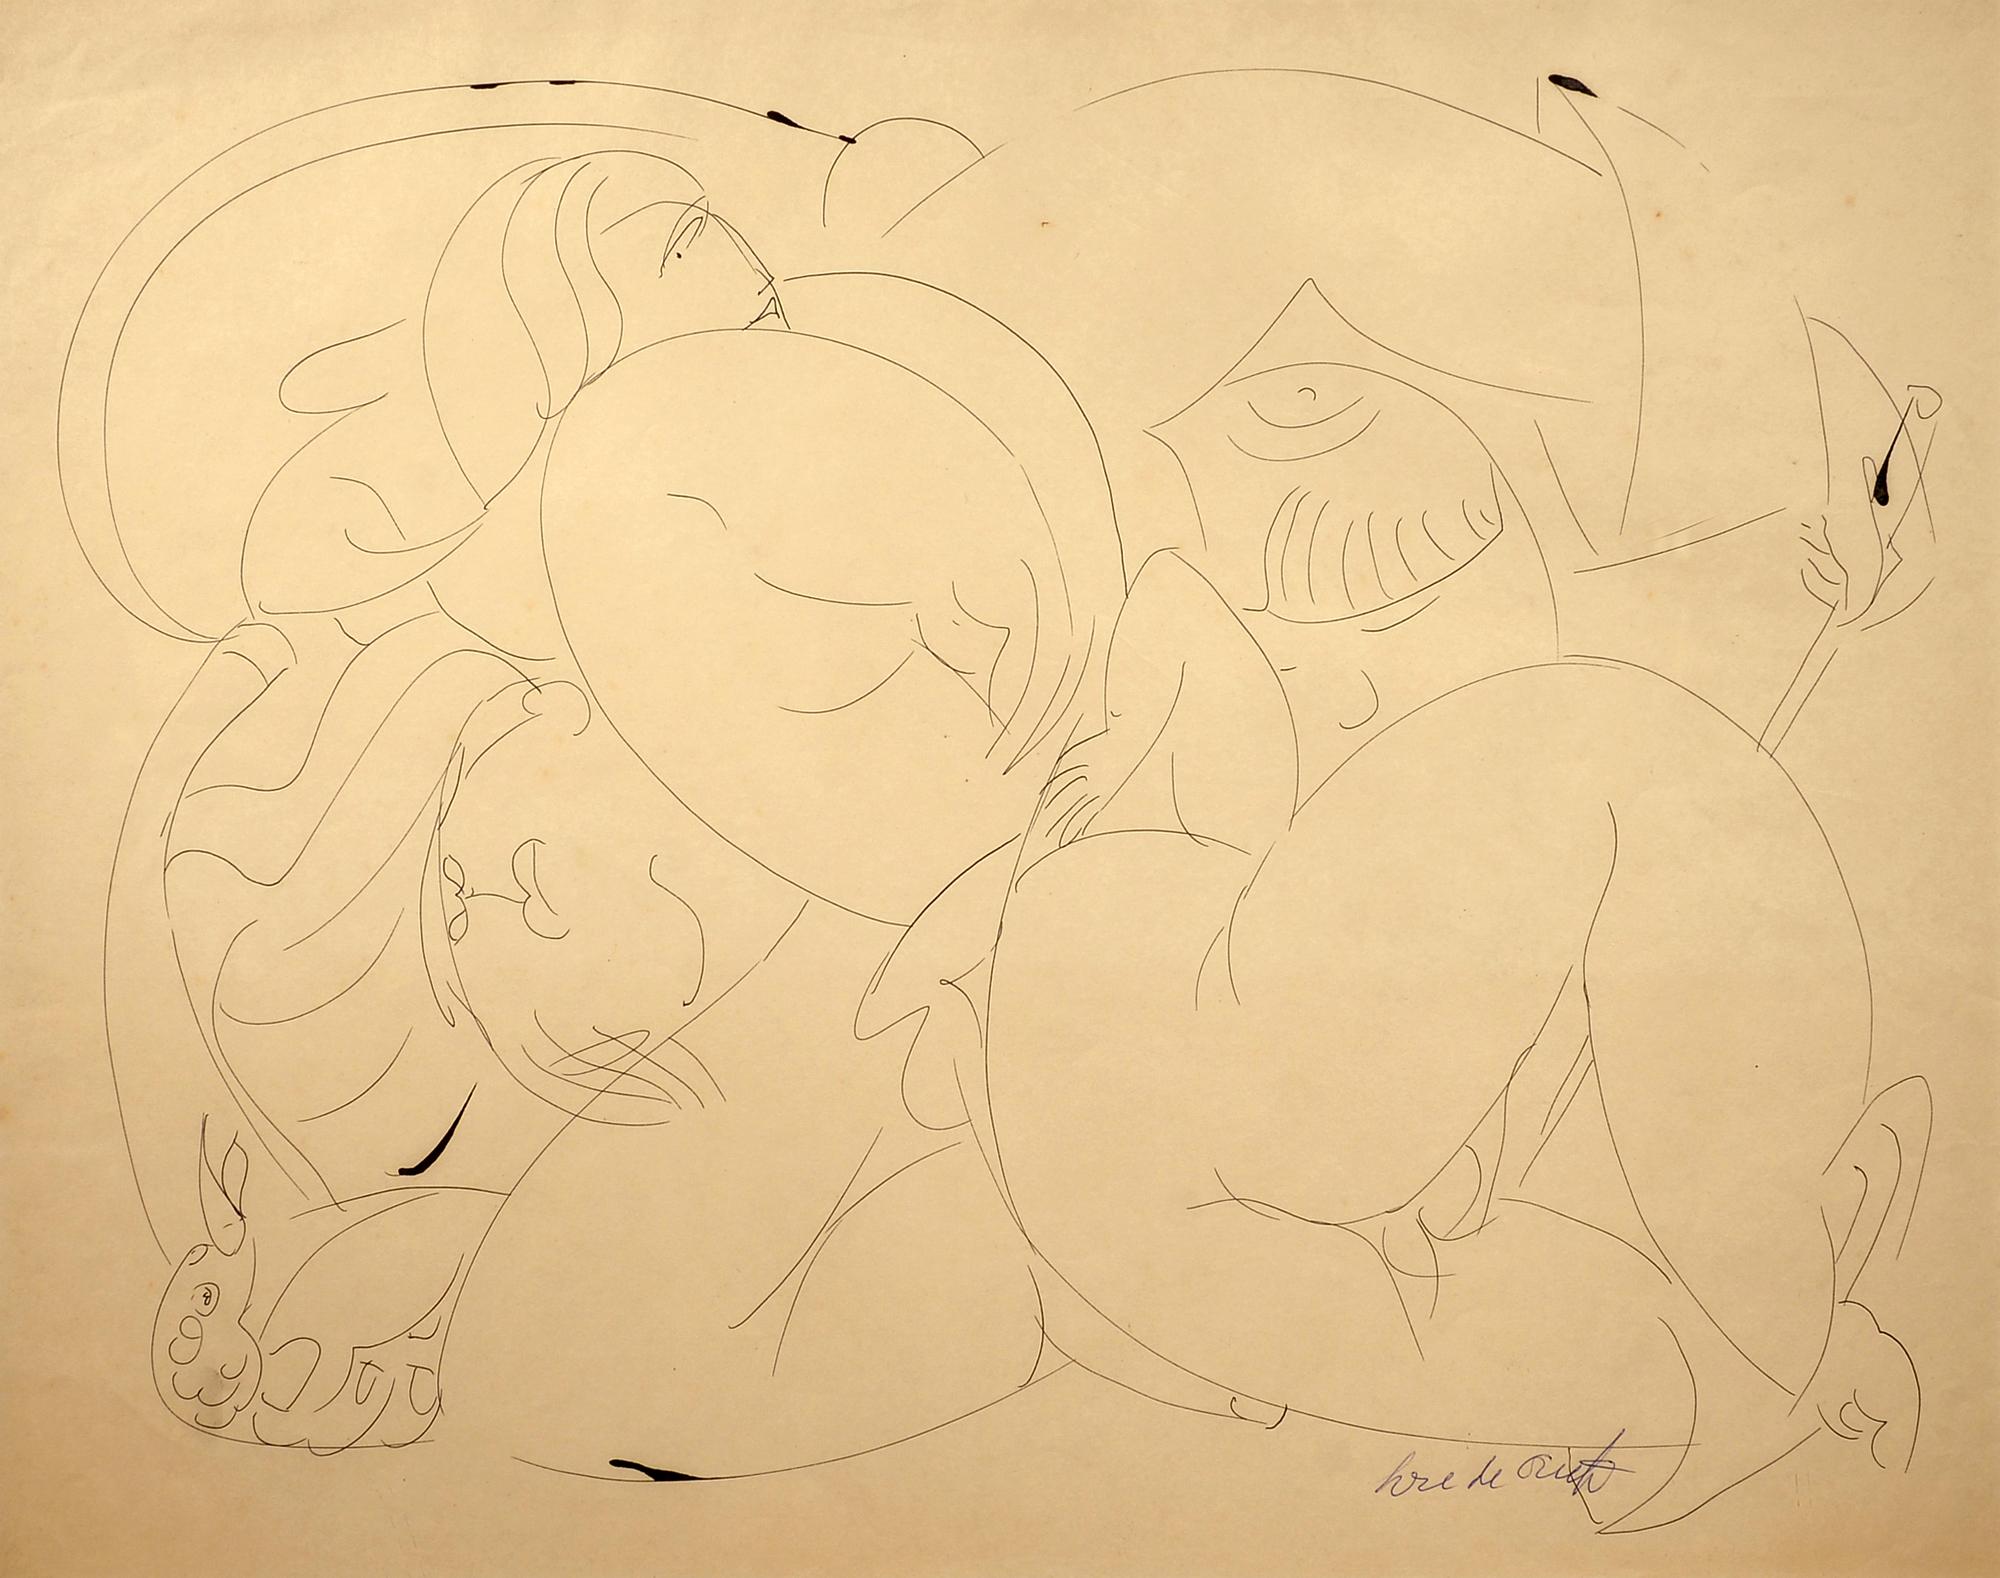 "Three Graces," Jose de Creeft, ink on paper, modern, figurative art, ca 1930's